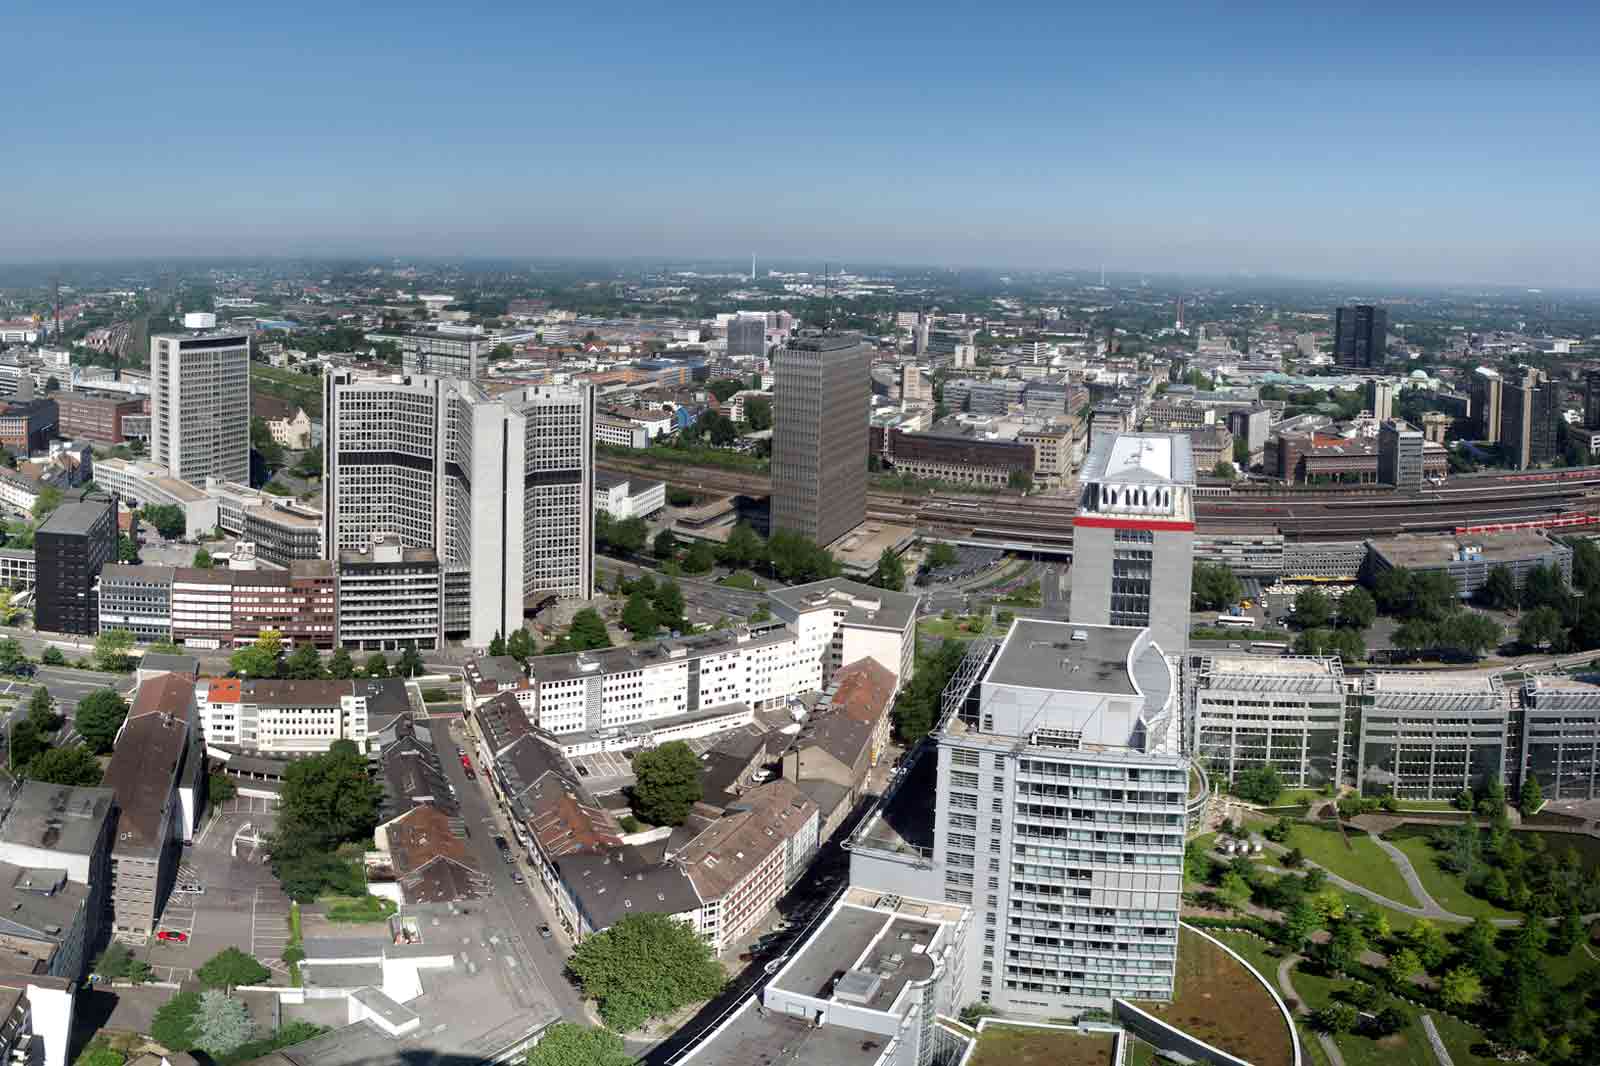 Panorama of Essen